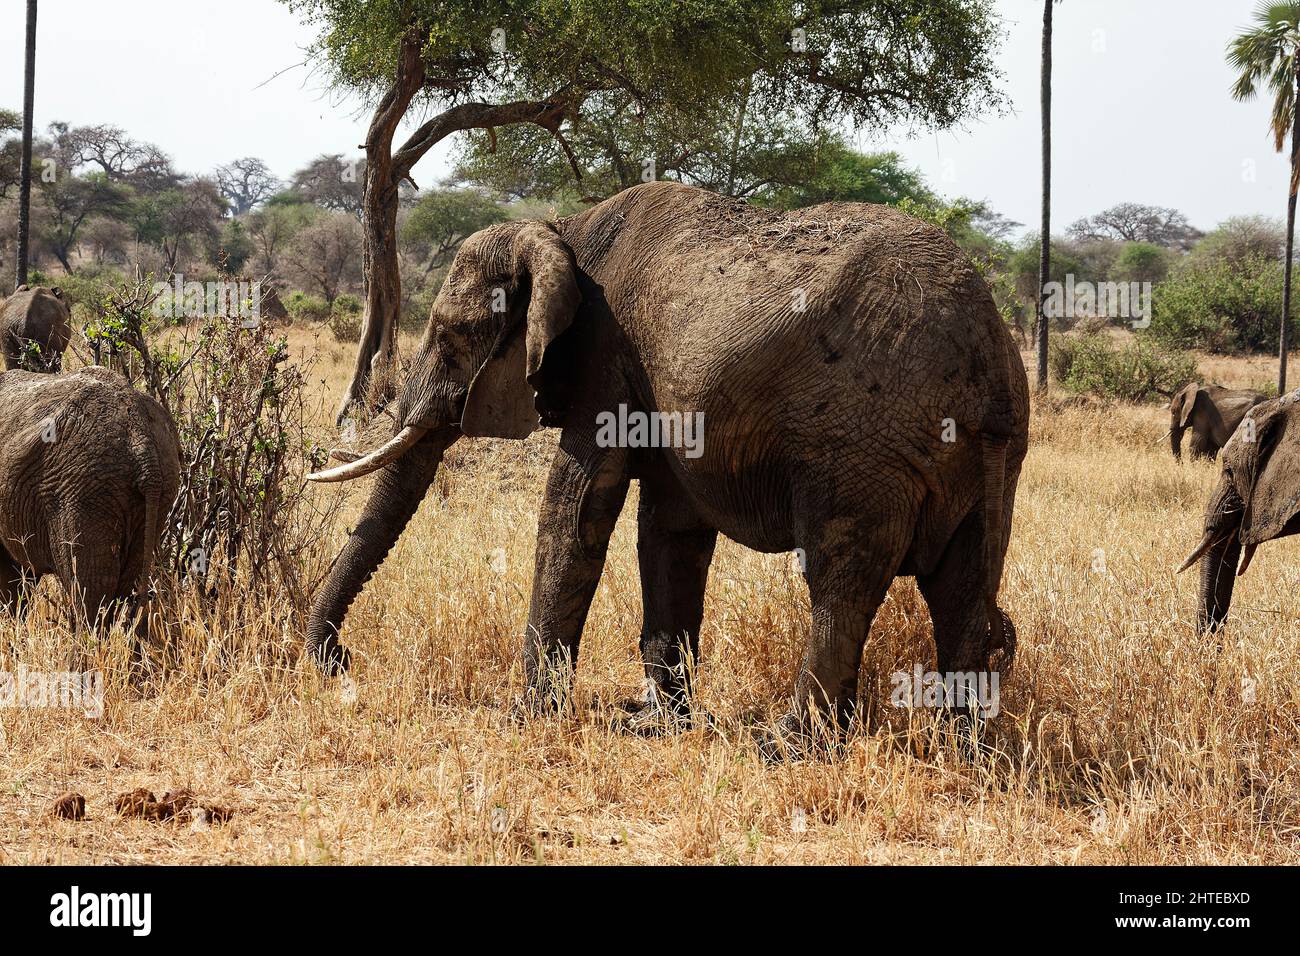 African elephant, grazing, Loxodanta africana, herbivores, largest land mammal, muscular trunk, tusks, large ears, wildlife, animal, Tarangire Nationa Stock Photo